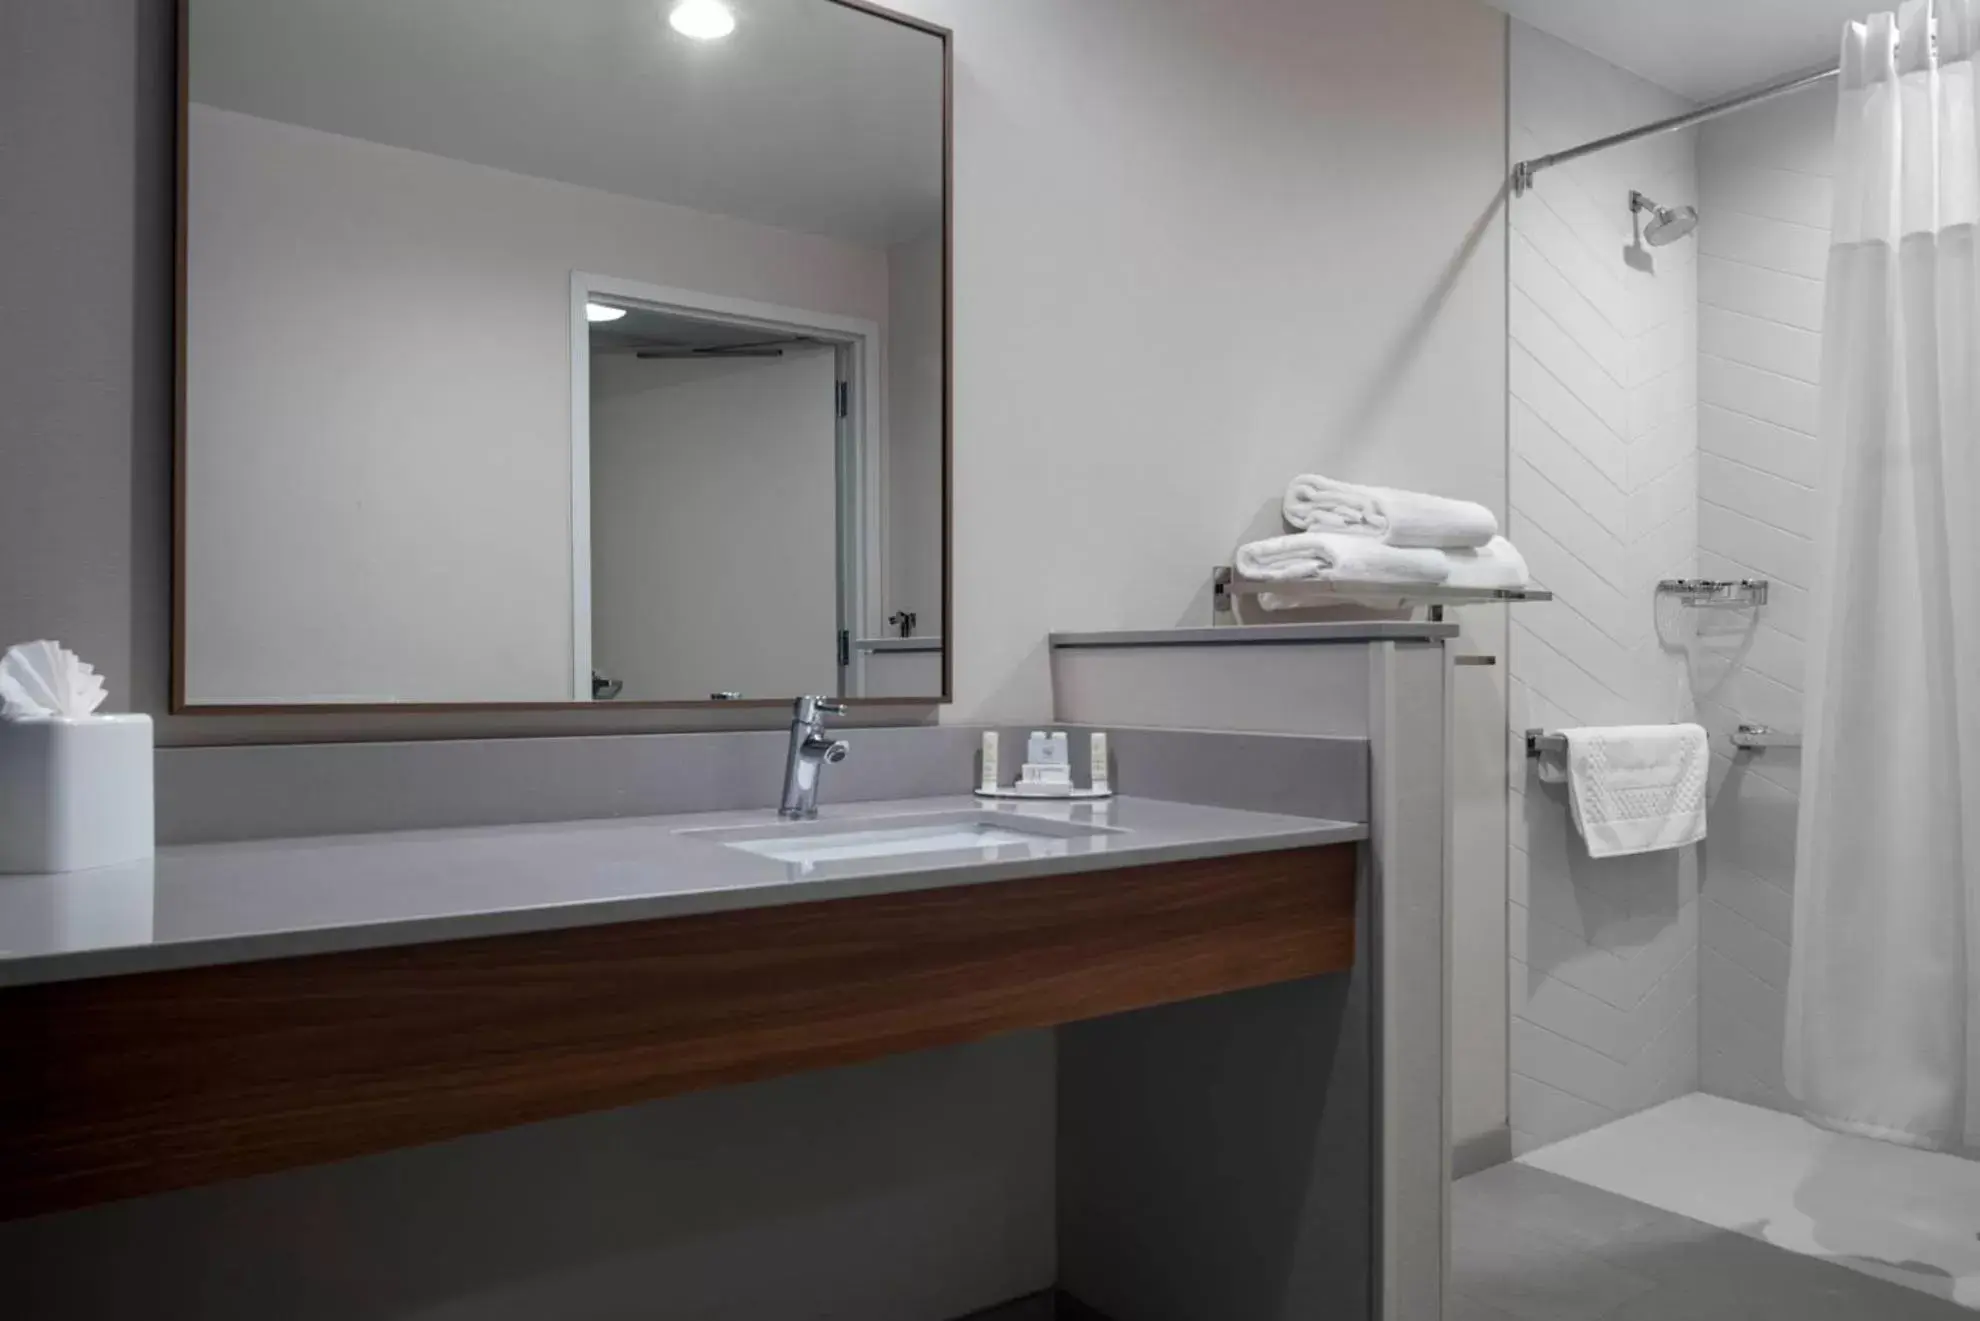 Public Bath, Bathroom in Fairfield by Marriott Inn & Suites Dallas DFW Airport North, Irving